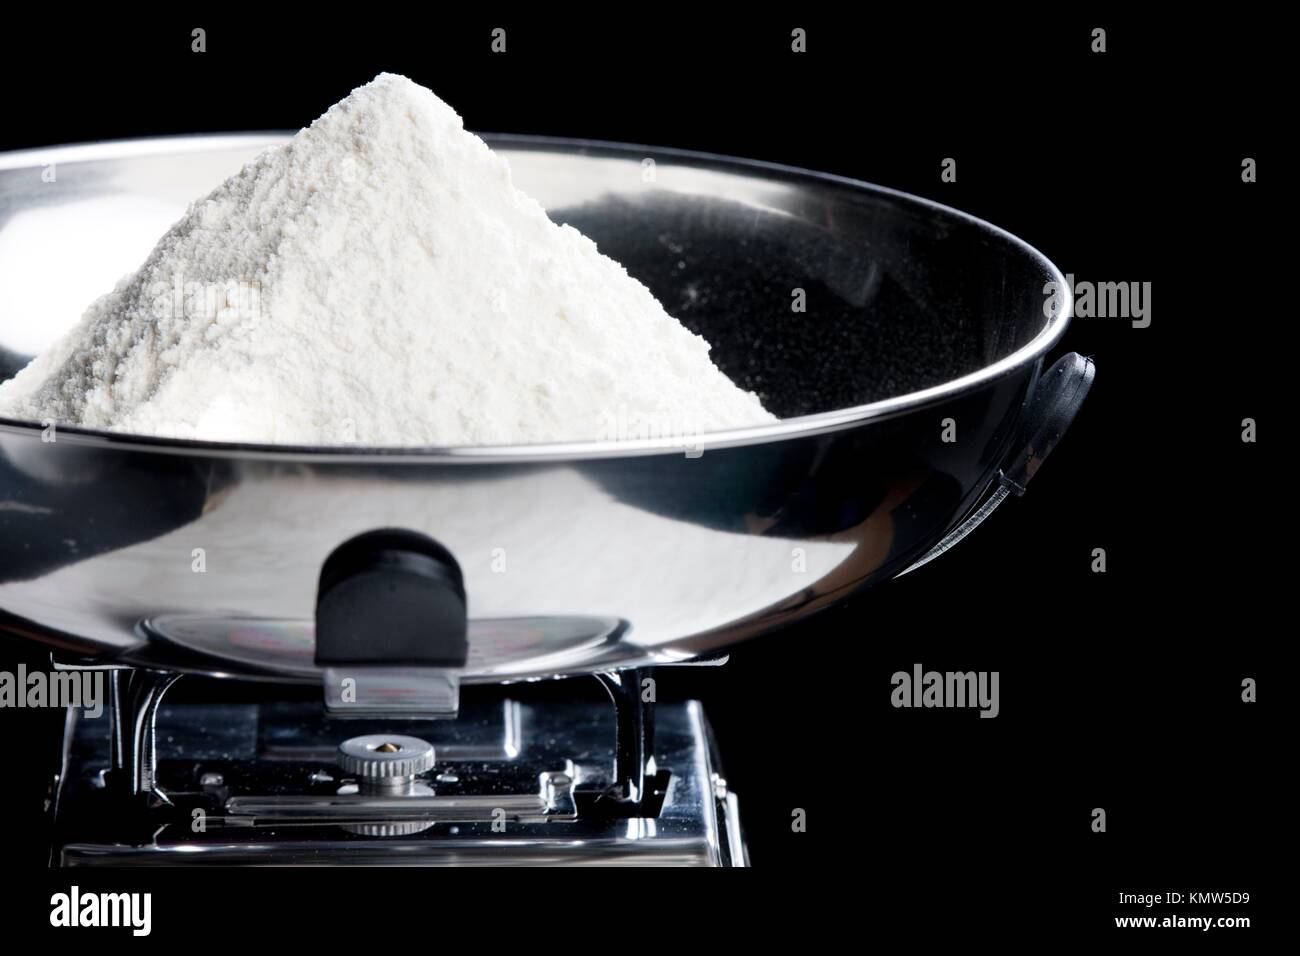 https://c8.alamy.com/comp/KMW5D9/flour-on-kitchen-scales-KMW5D9.jpg